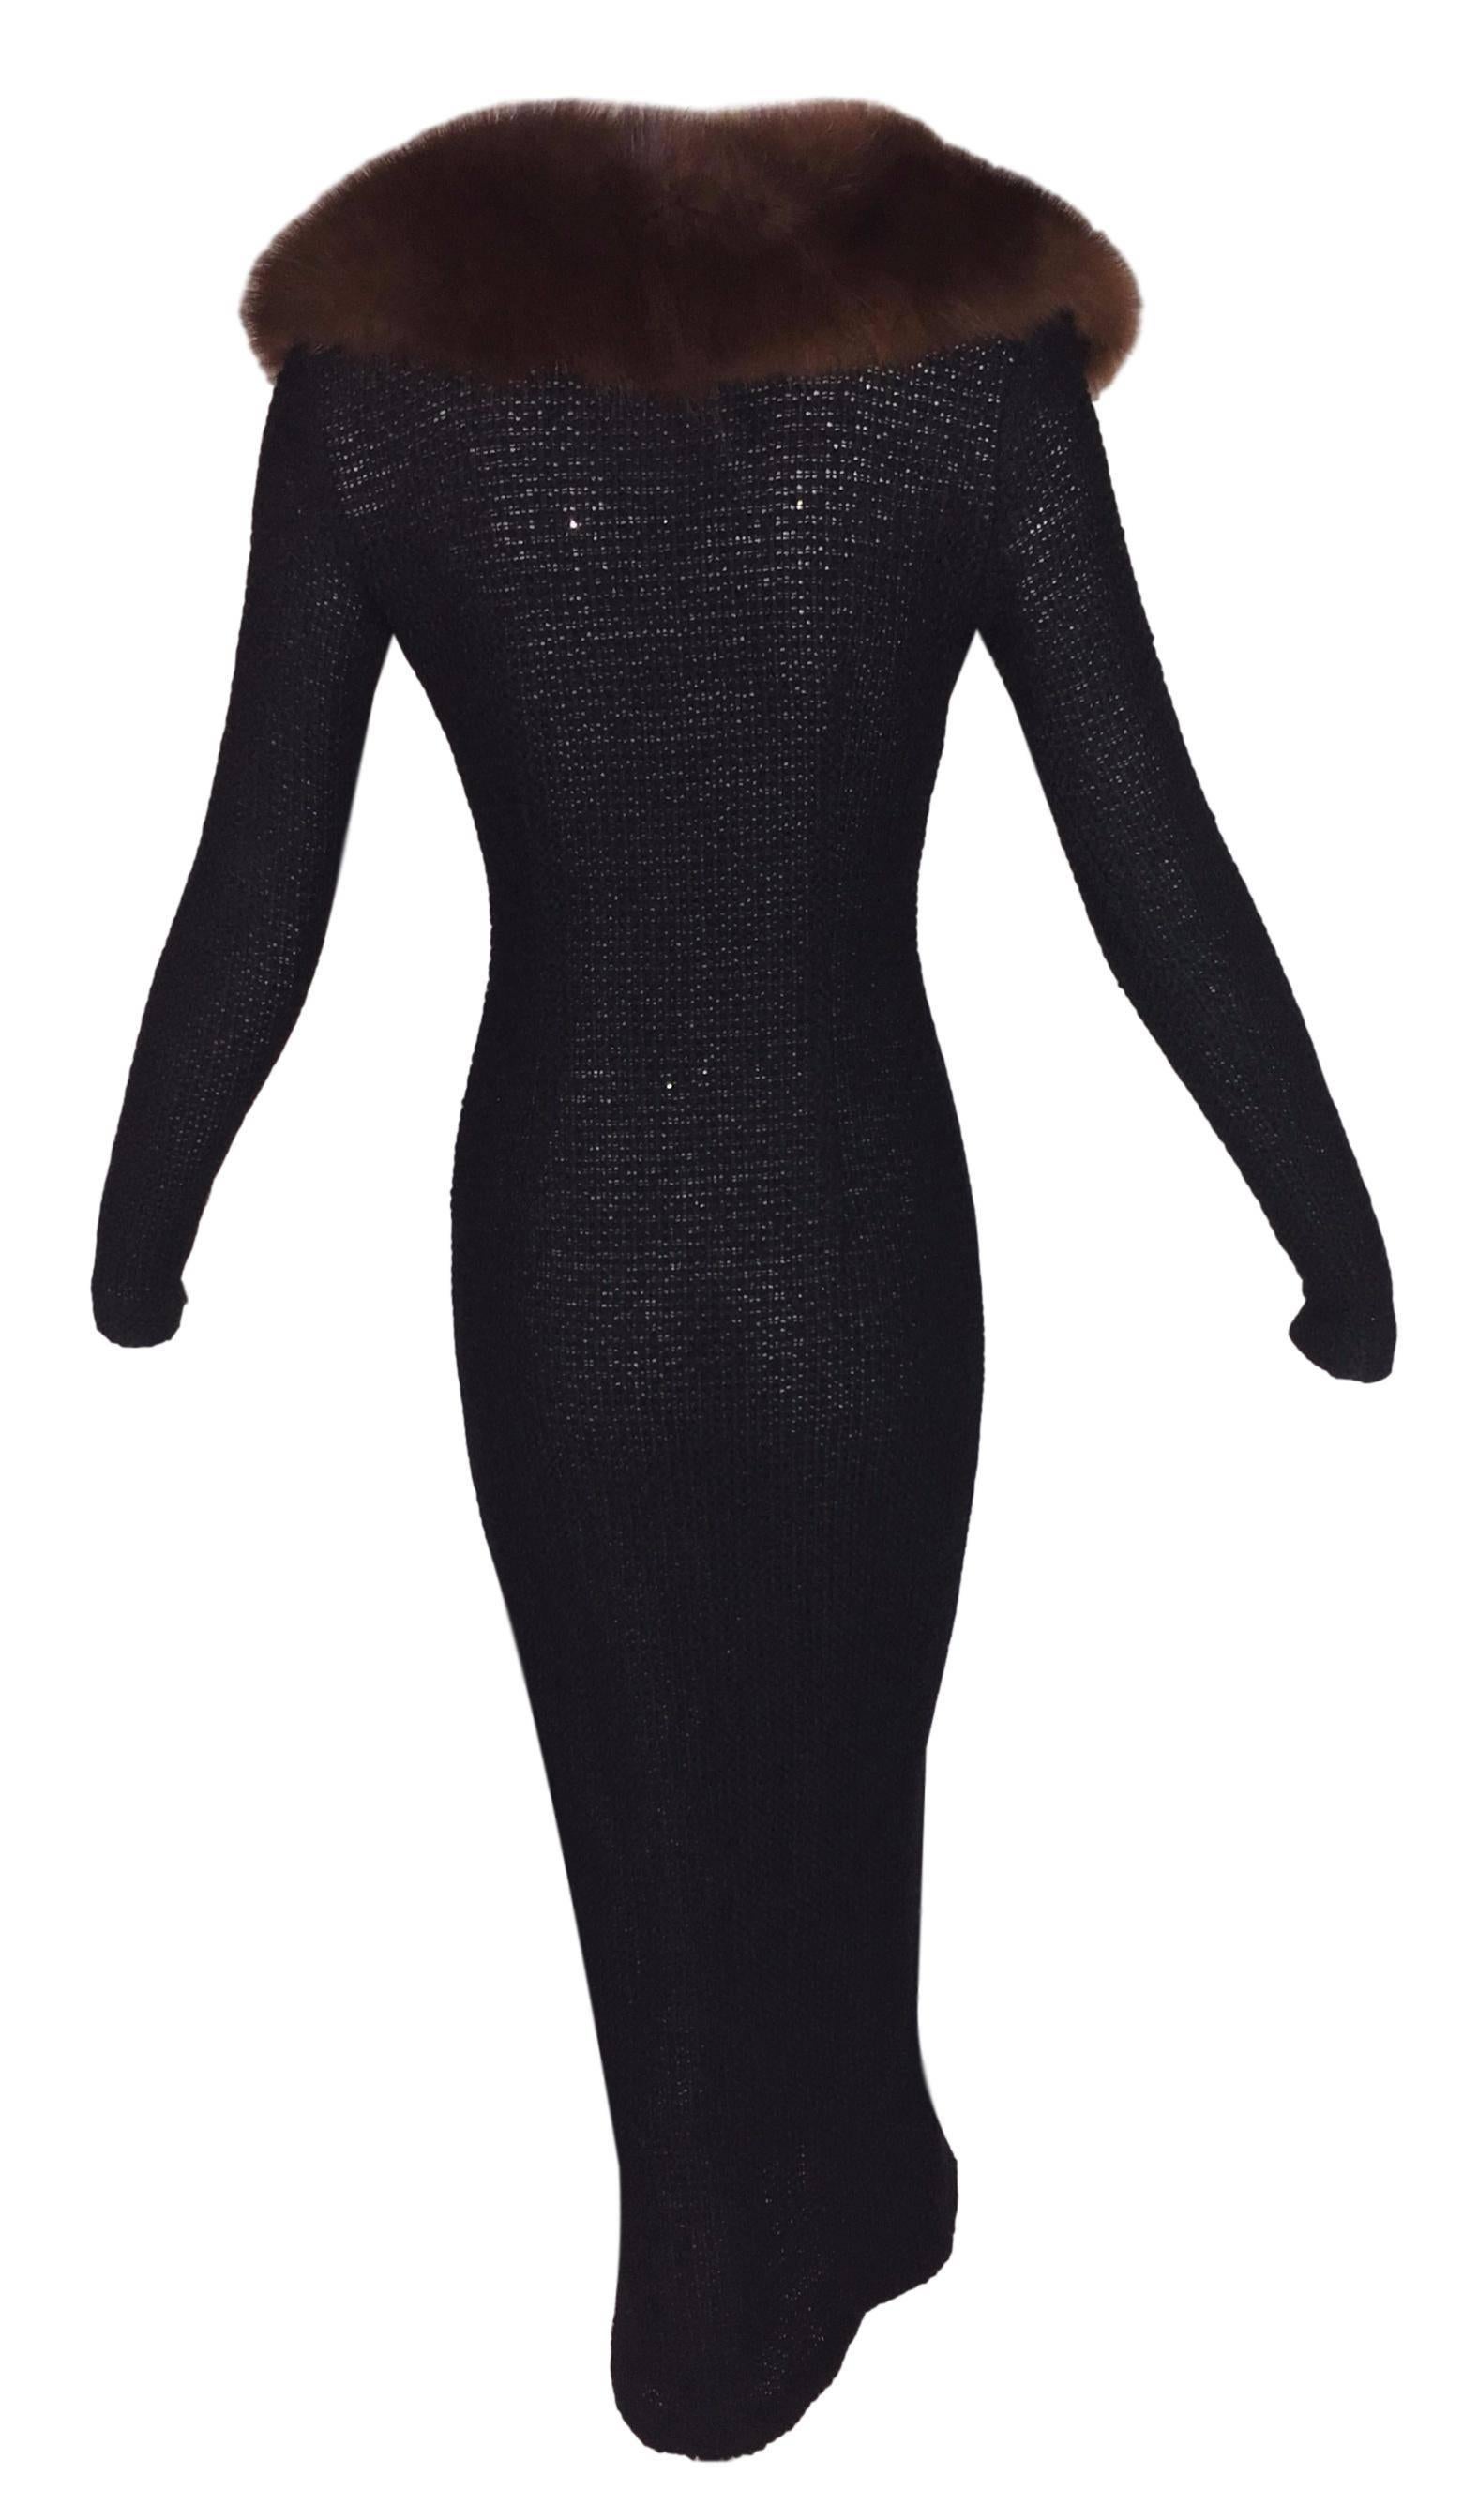 Black Dolce & Gabbana Sheer Knit 40s Pin-Up Sweater Dress Sable Fur 44 S S/S 1997  